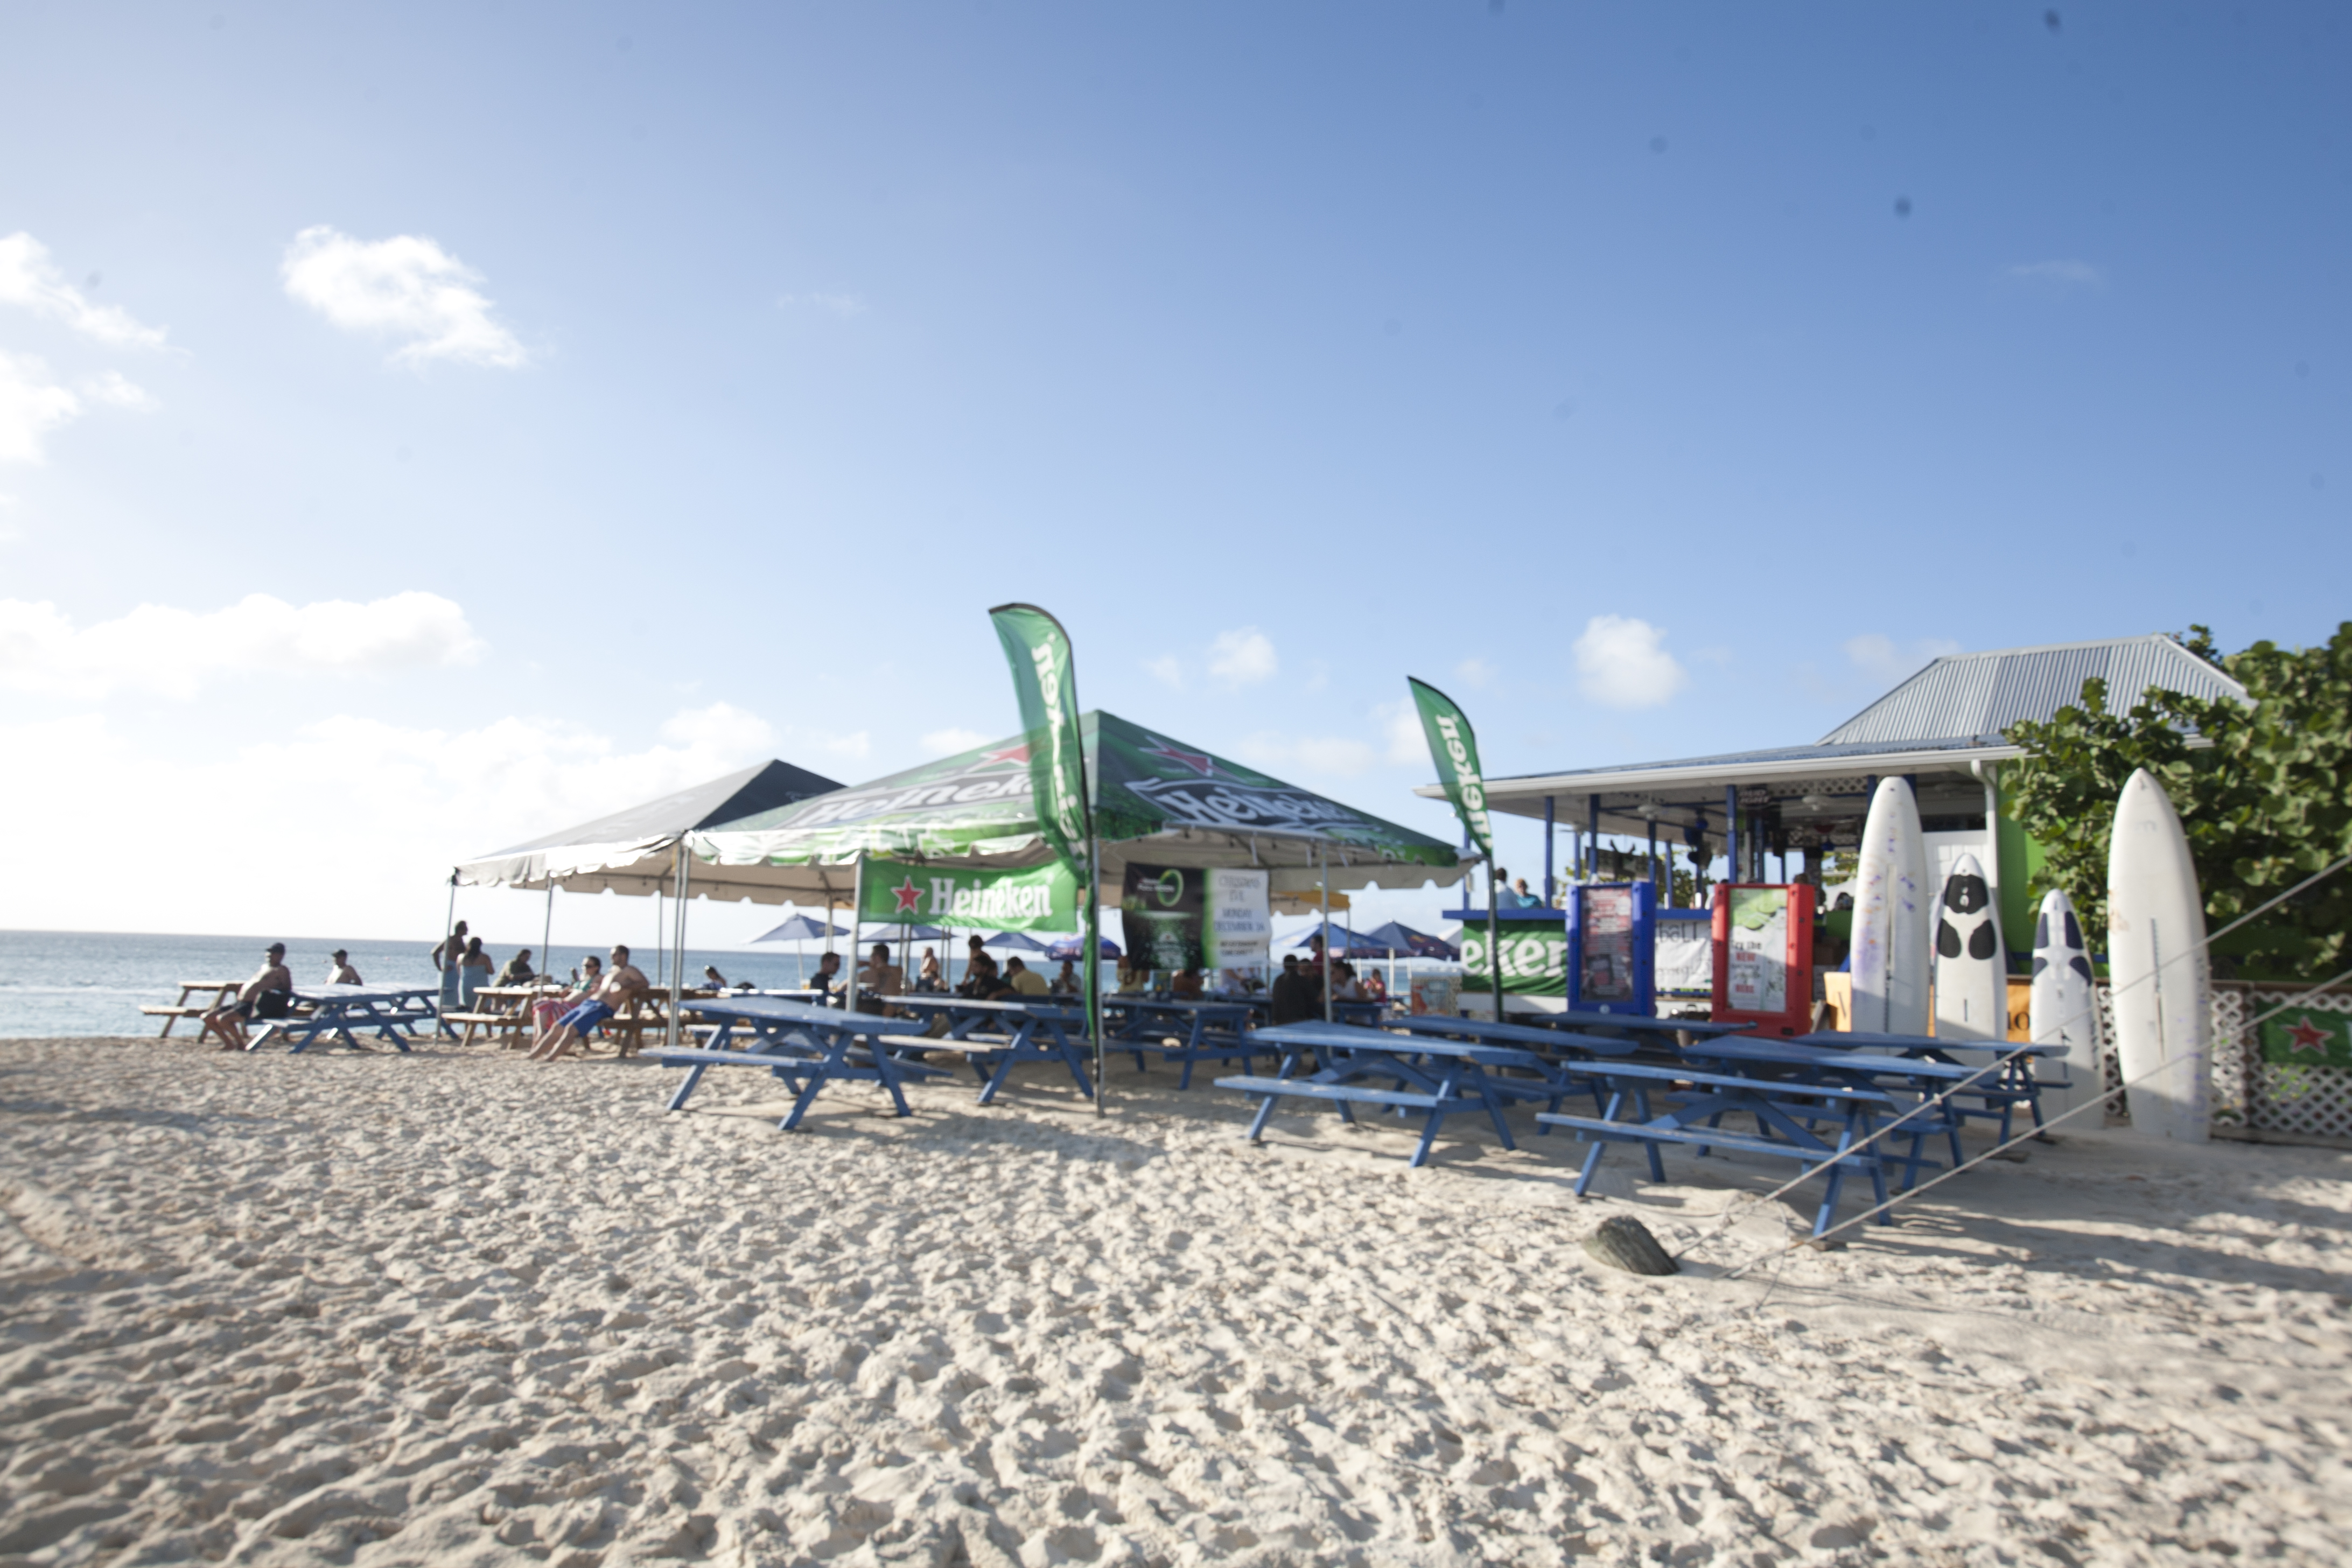 cayman islands beach